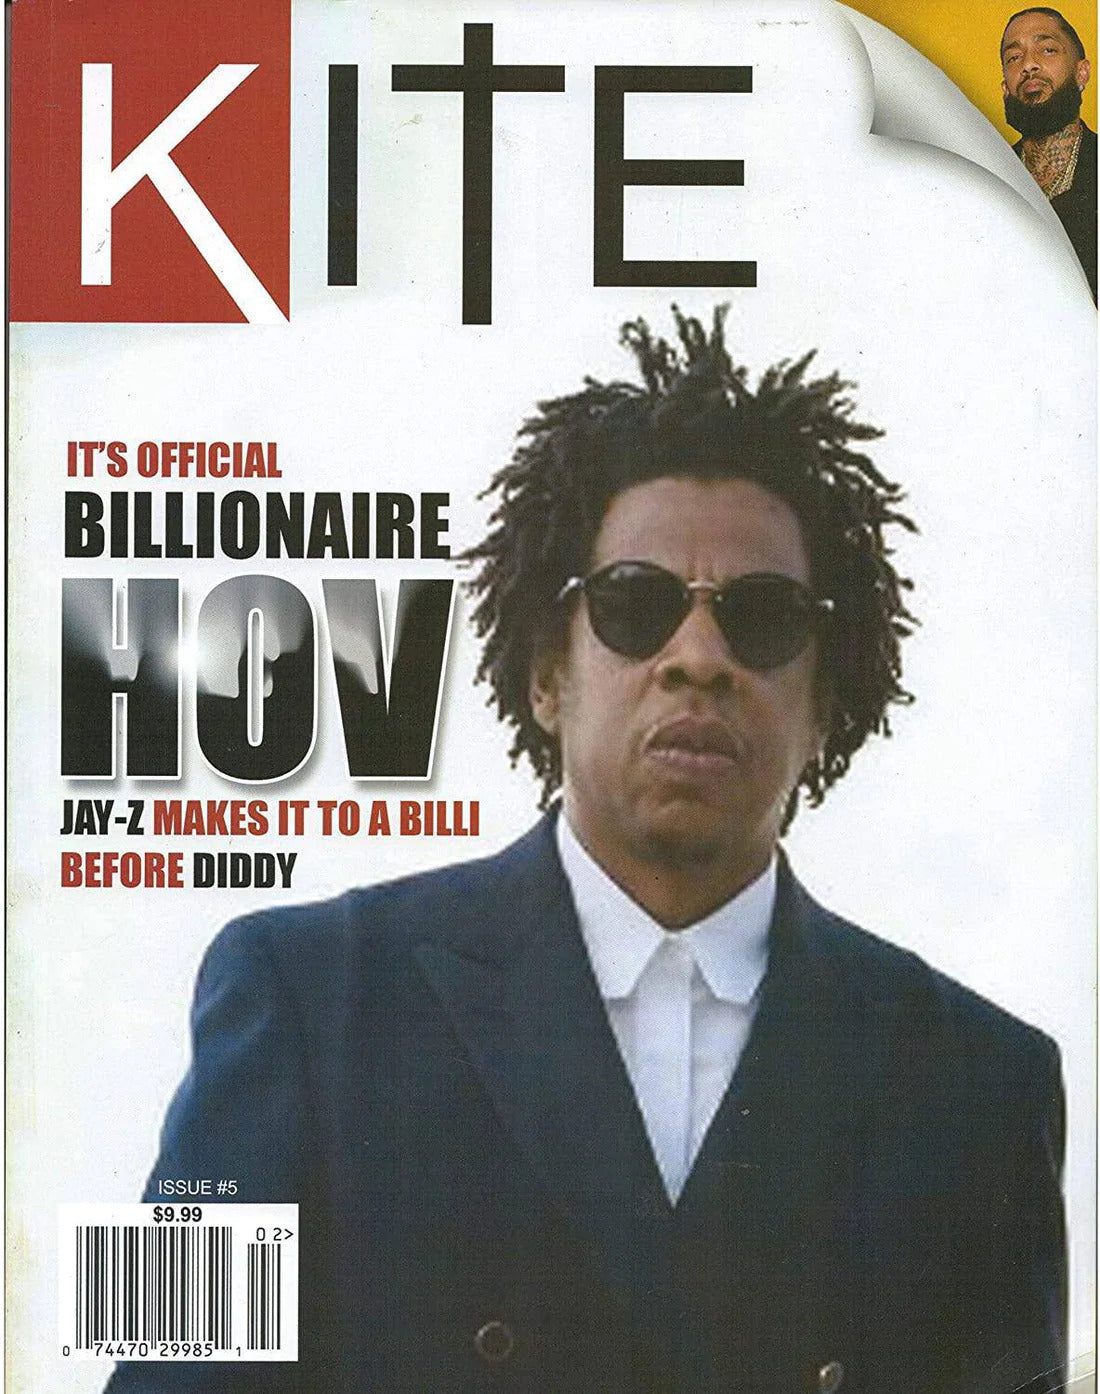 Kite Magazine